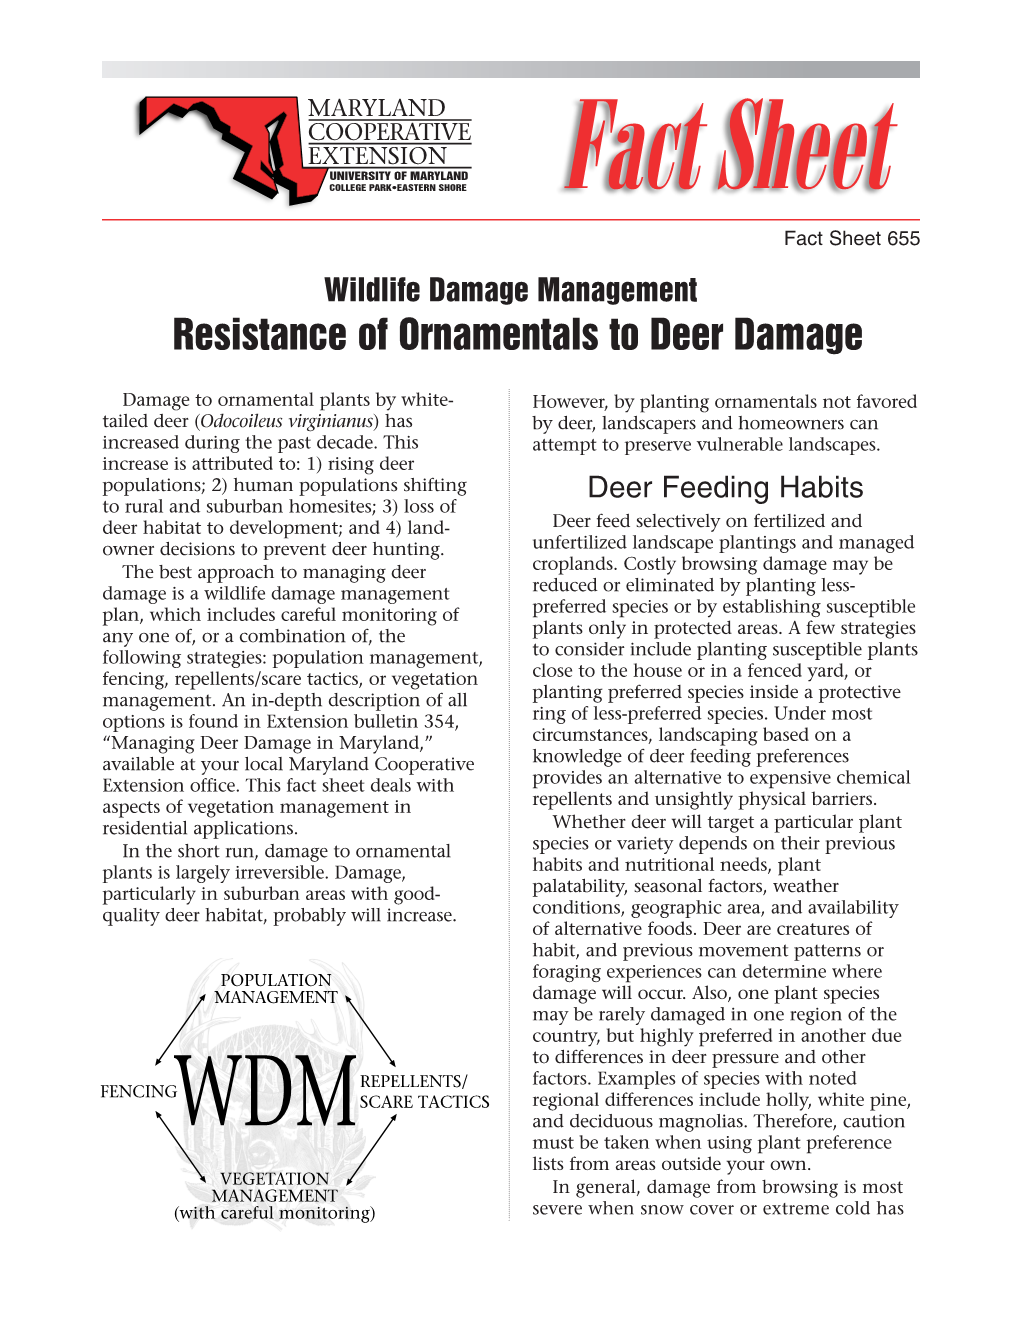 Resistance of Ornamentals to Deer Damage